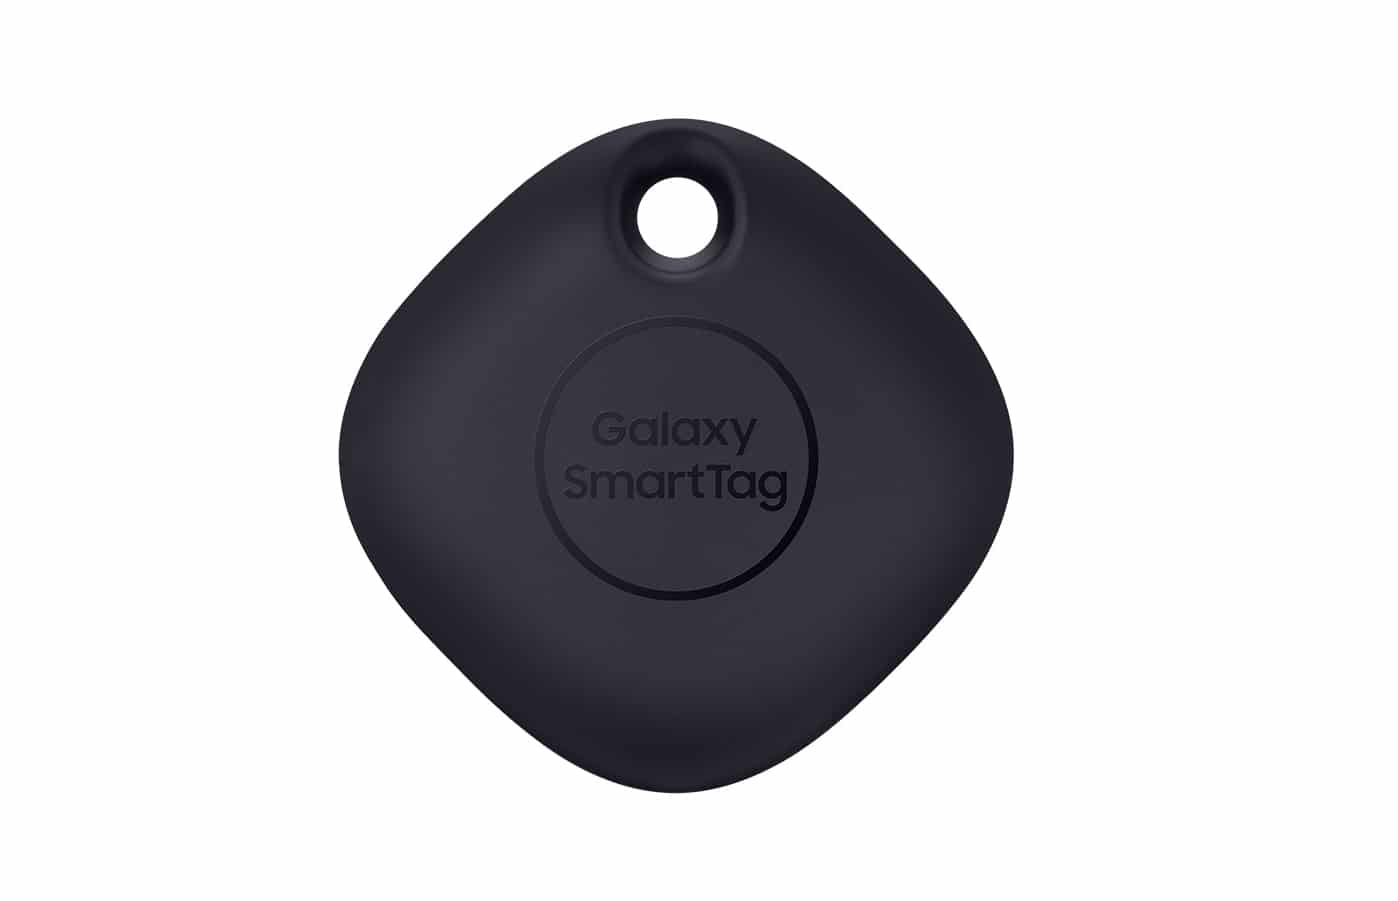 Samsung Galaxy SmartTags